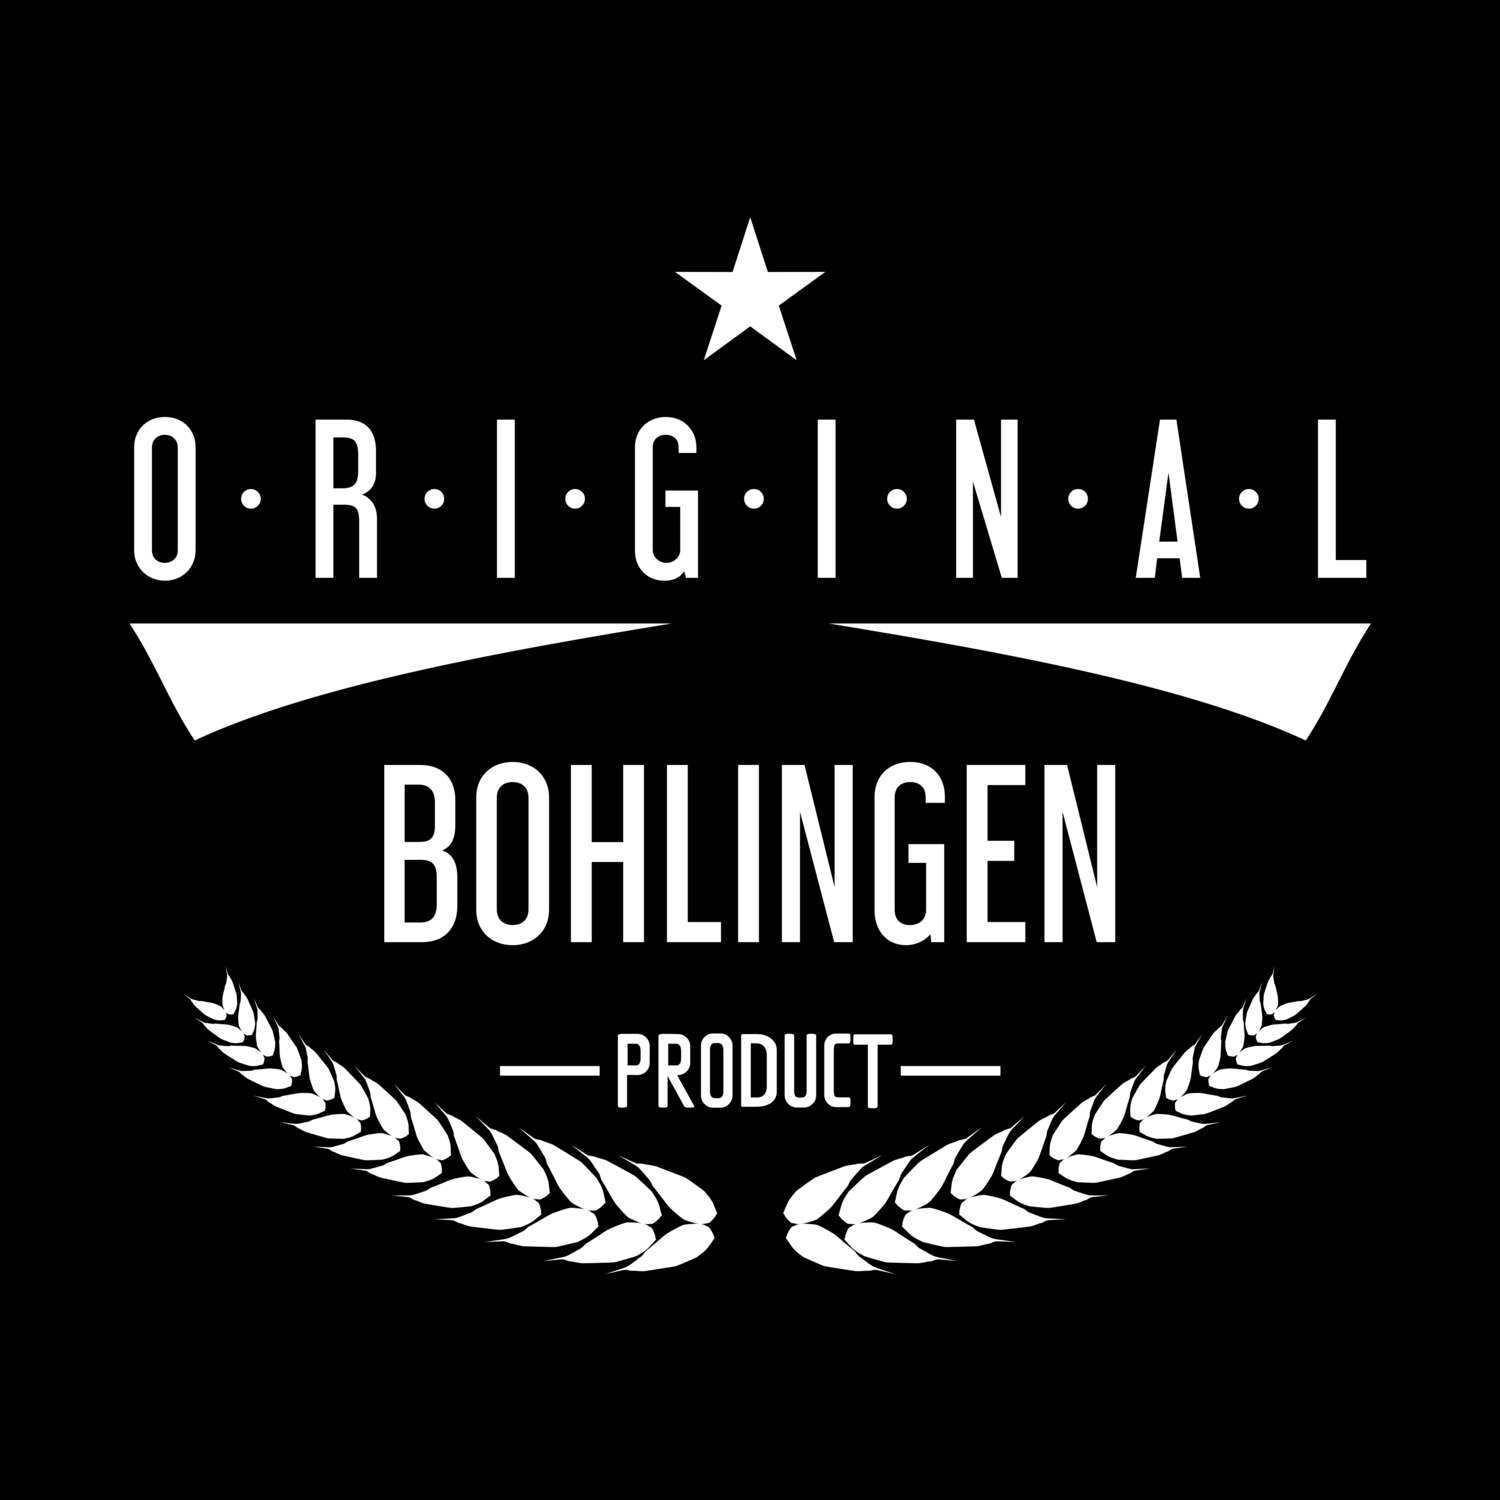 Bohlingen T-Shirt »Original Product«